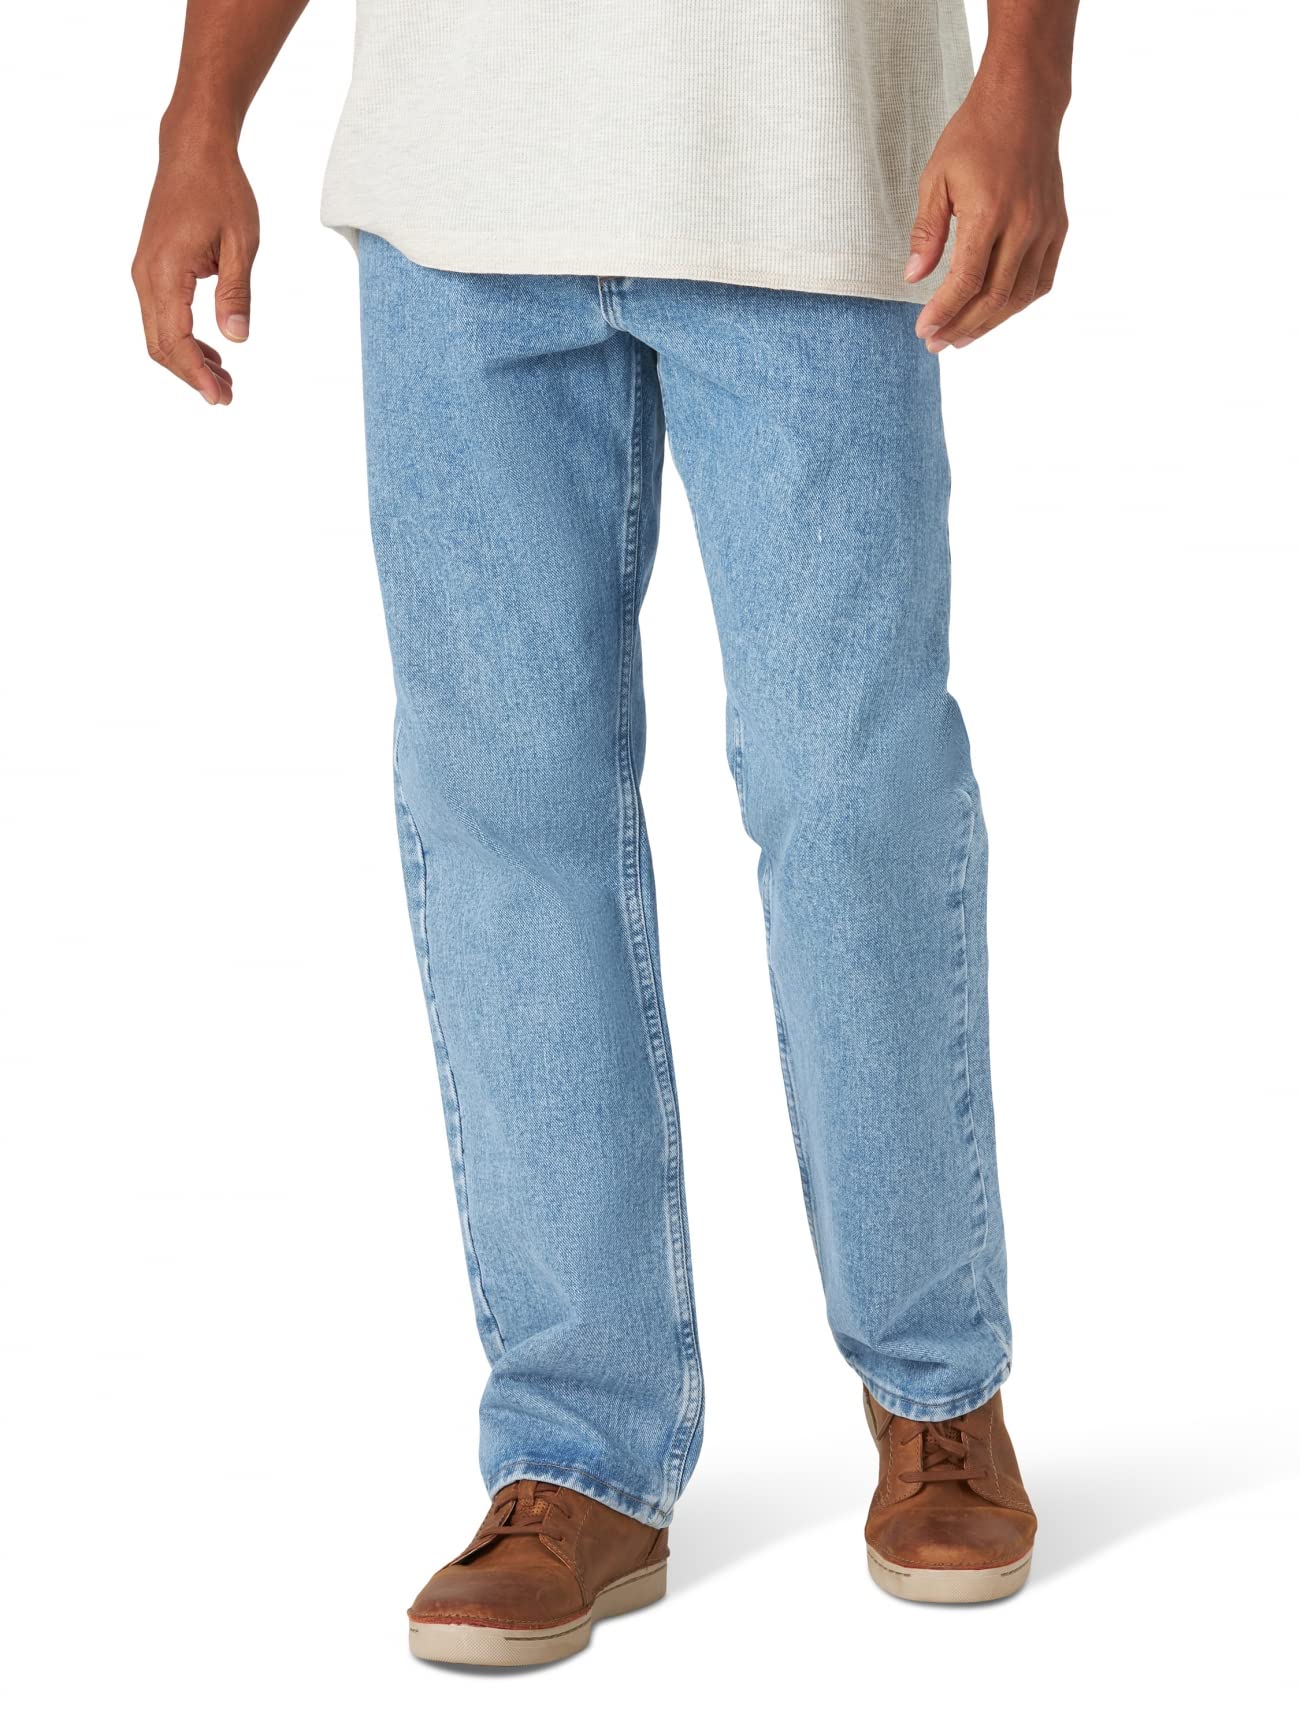 Wrangler Authentics Men's Classic 5-Pocket Relaxed Fit Cotton Jean, Stone Bleach, 33W x 32L